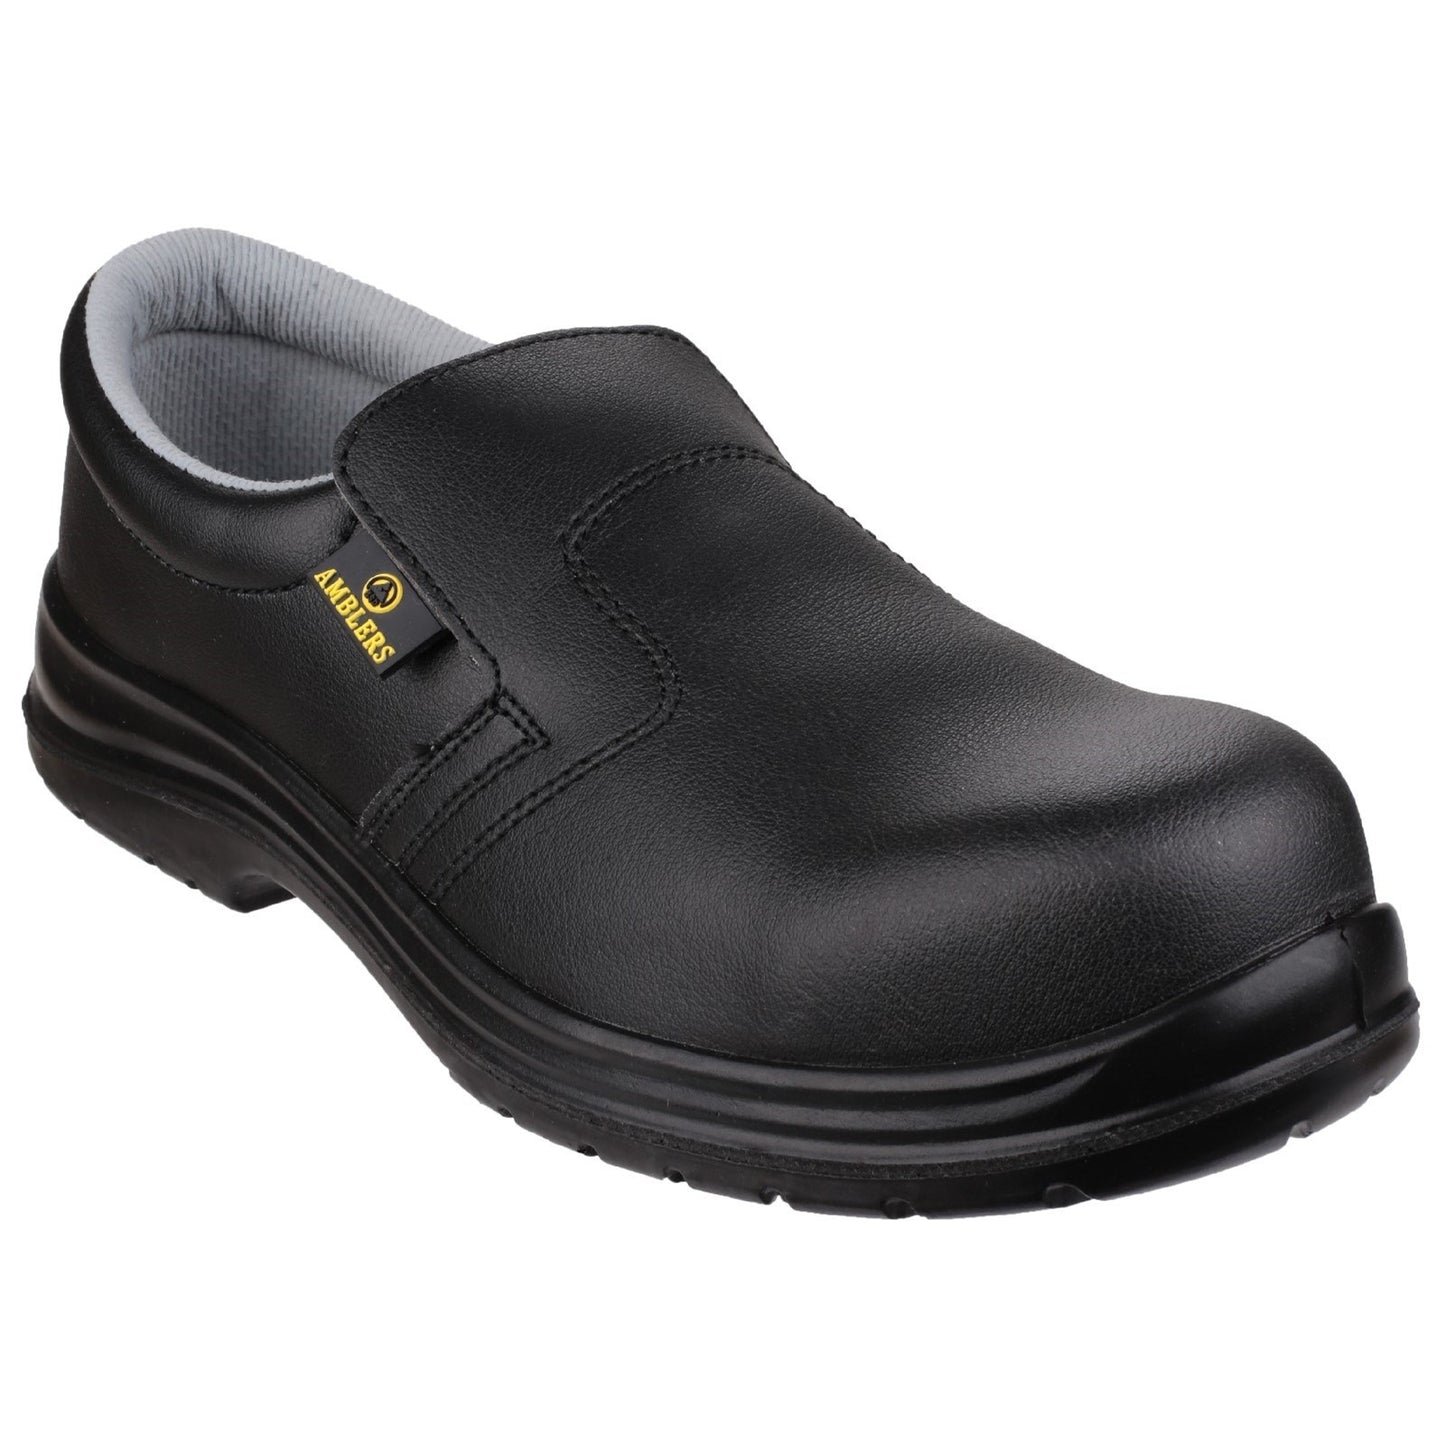 FS661 Metal Free Lightweight safety Shoe, Amblers Safety